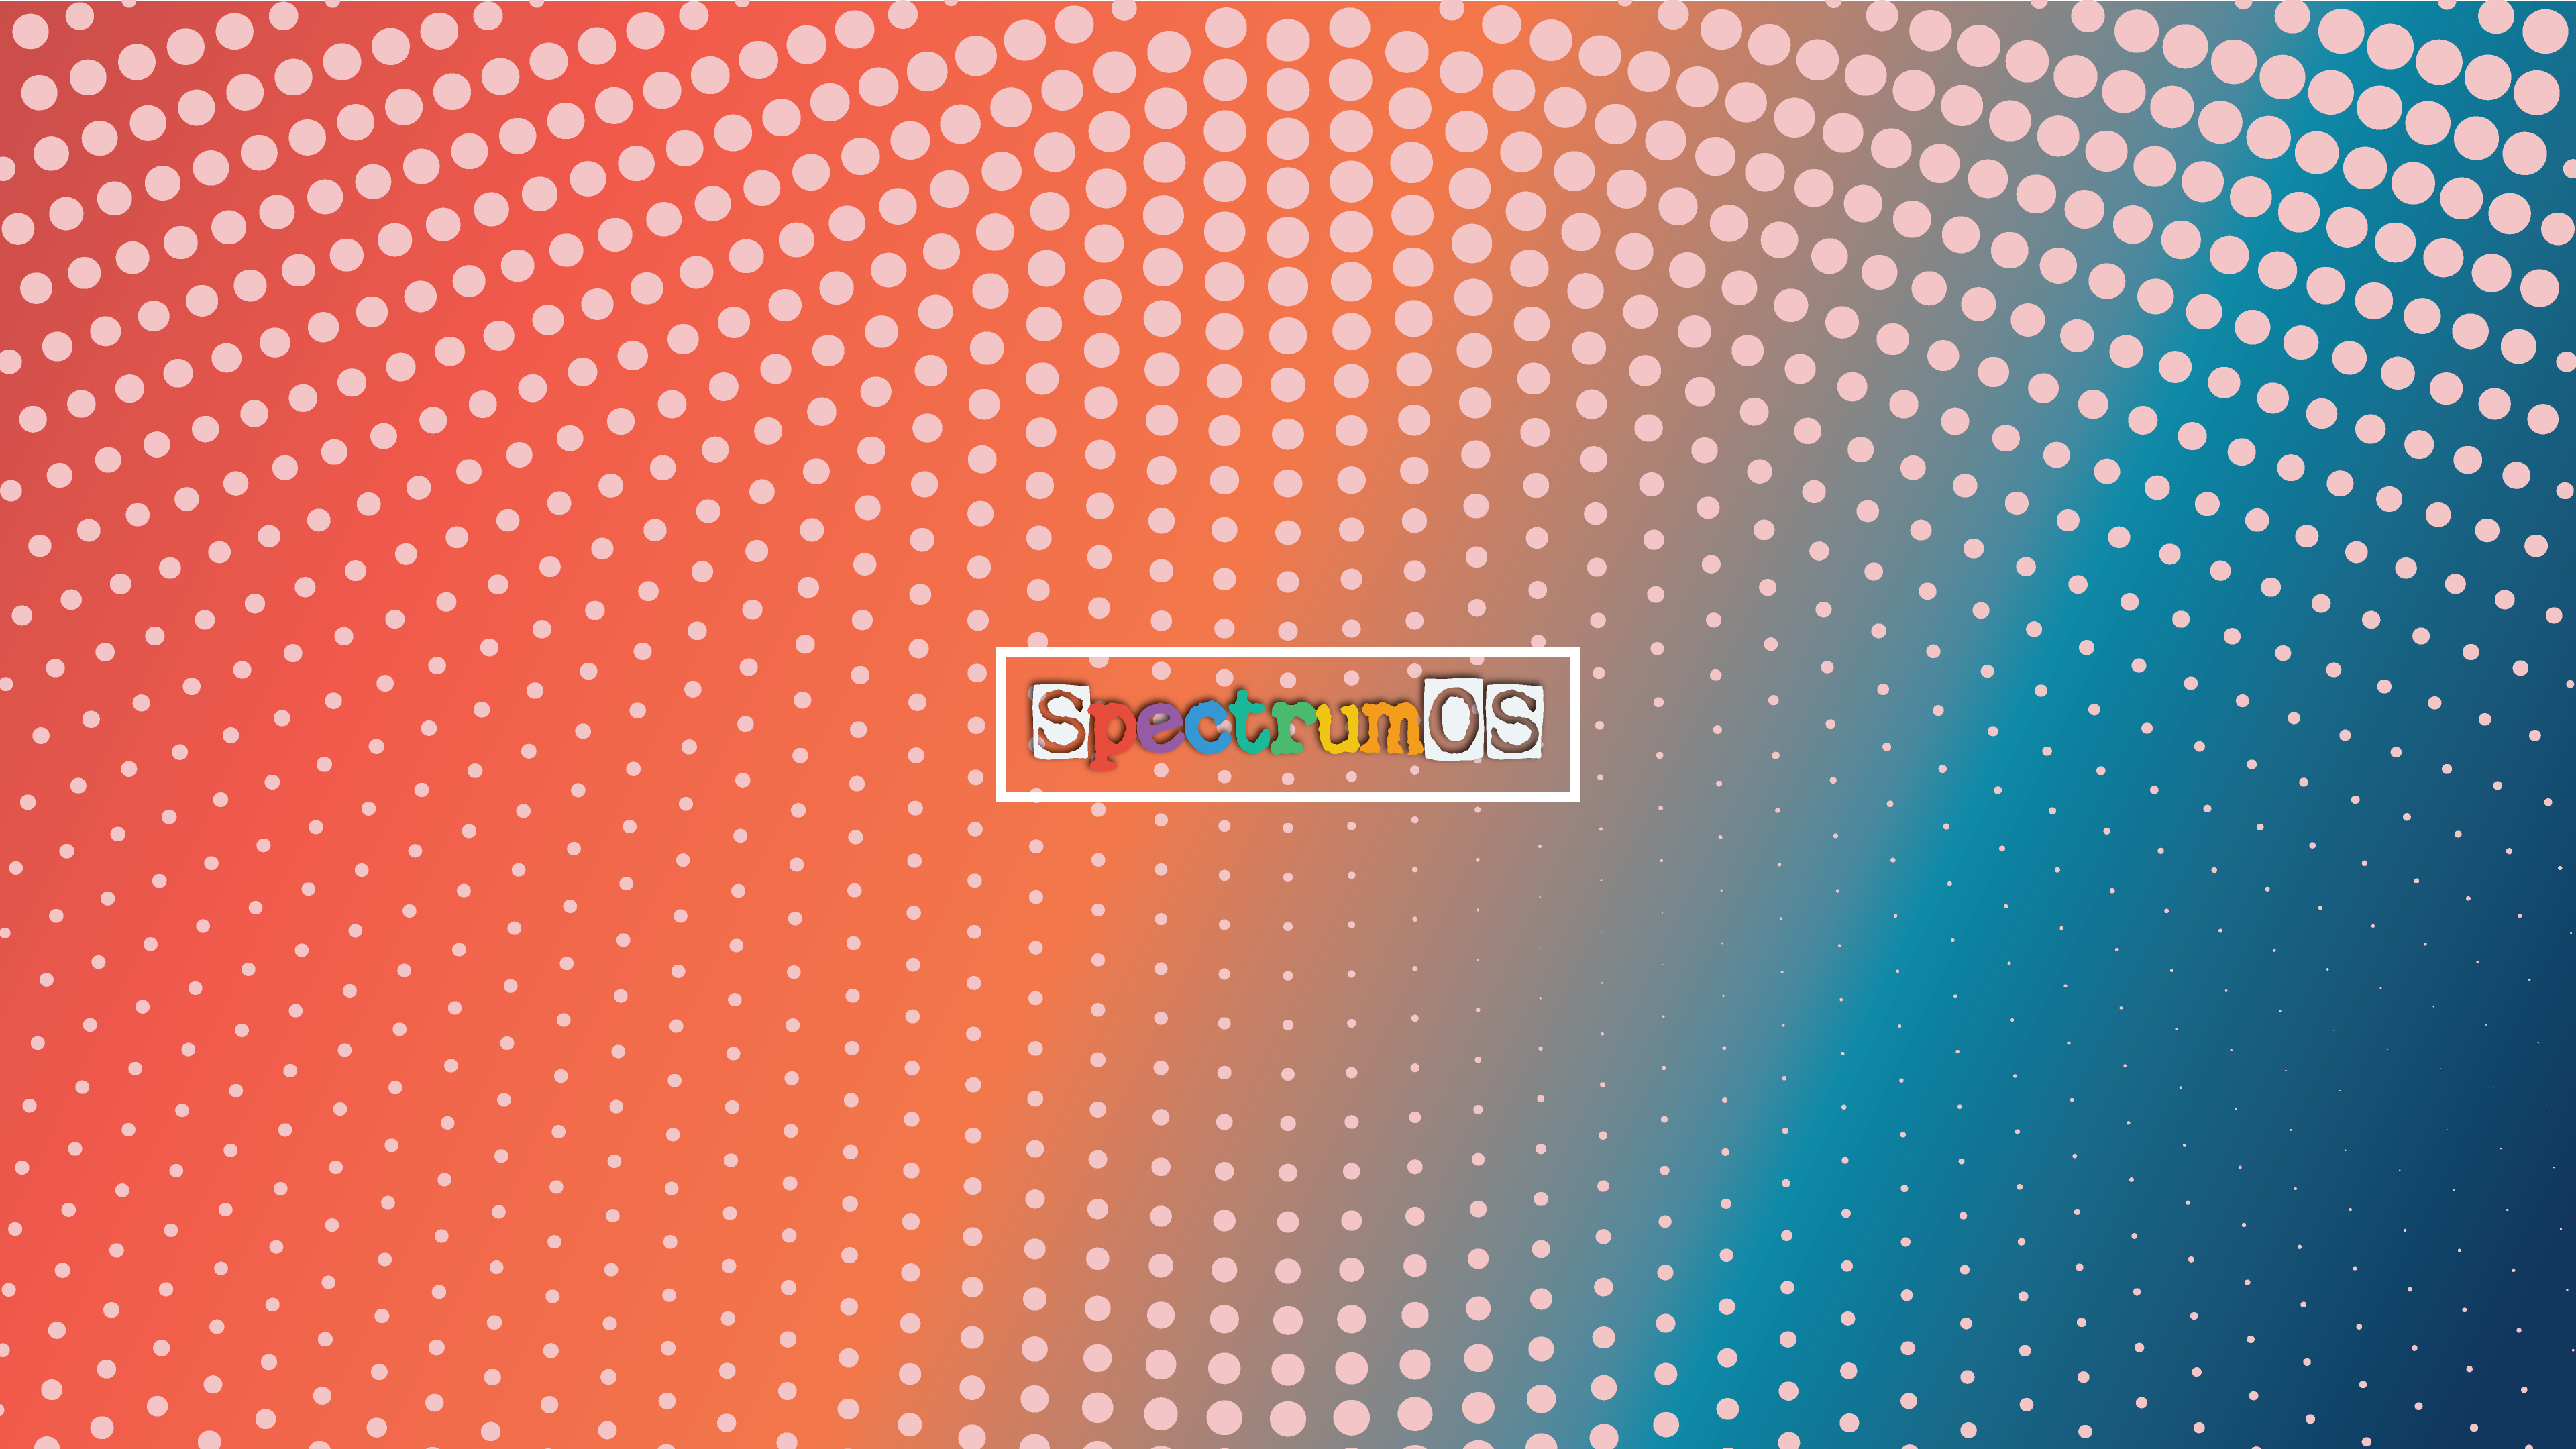 Linux SpectrumOS Arch Linux Minimalism Simple Background Logo Colorful 3840x2160